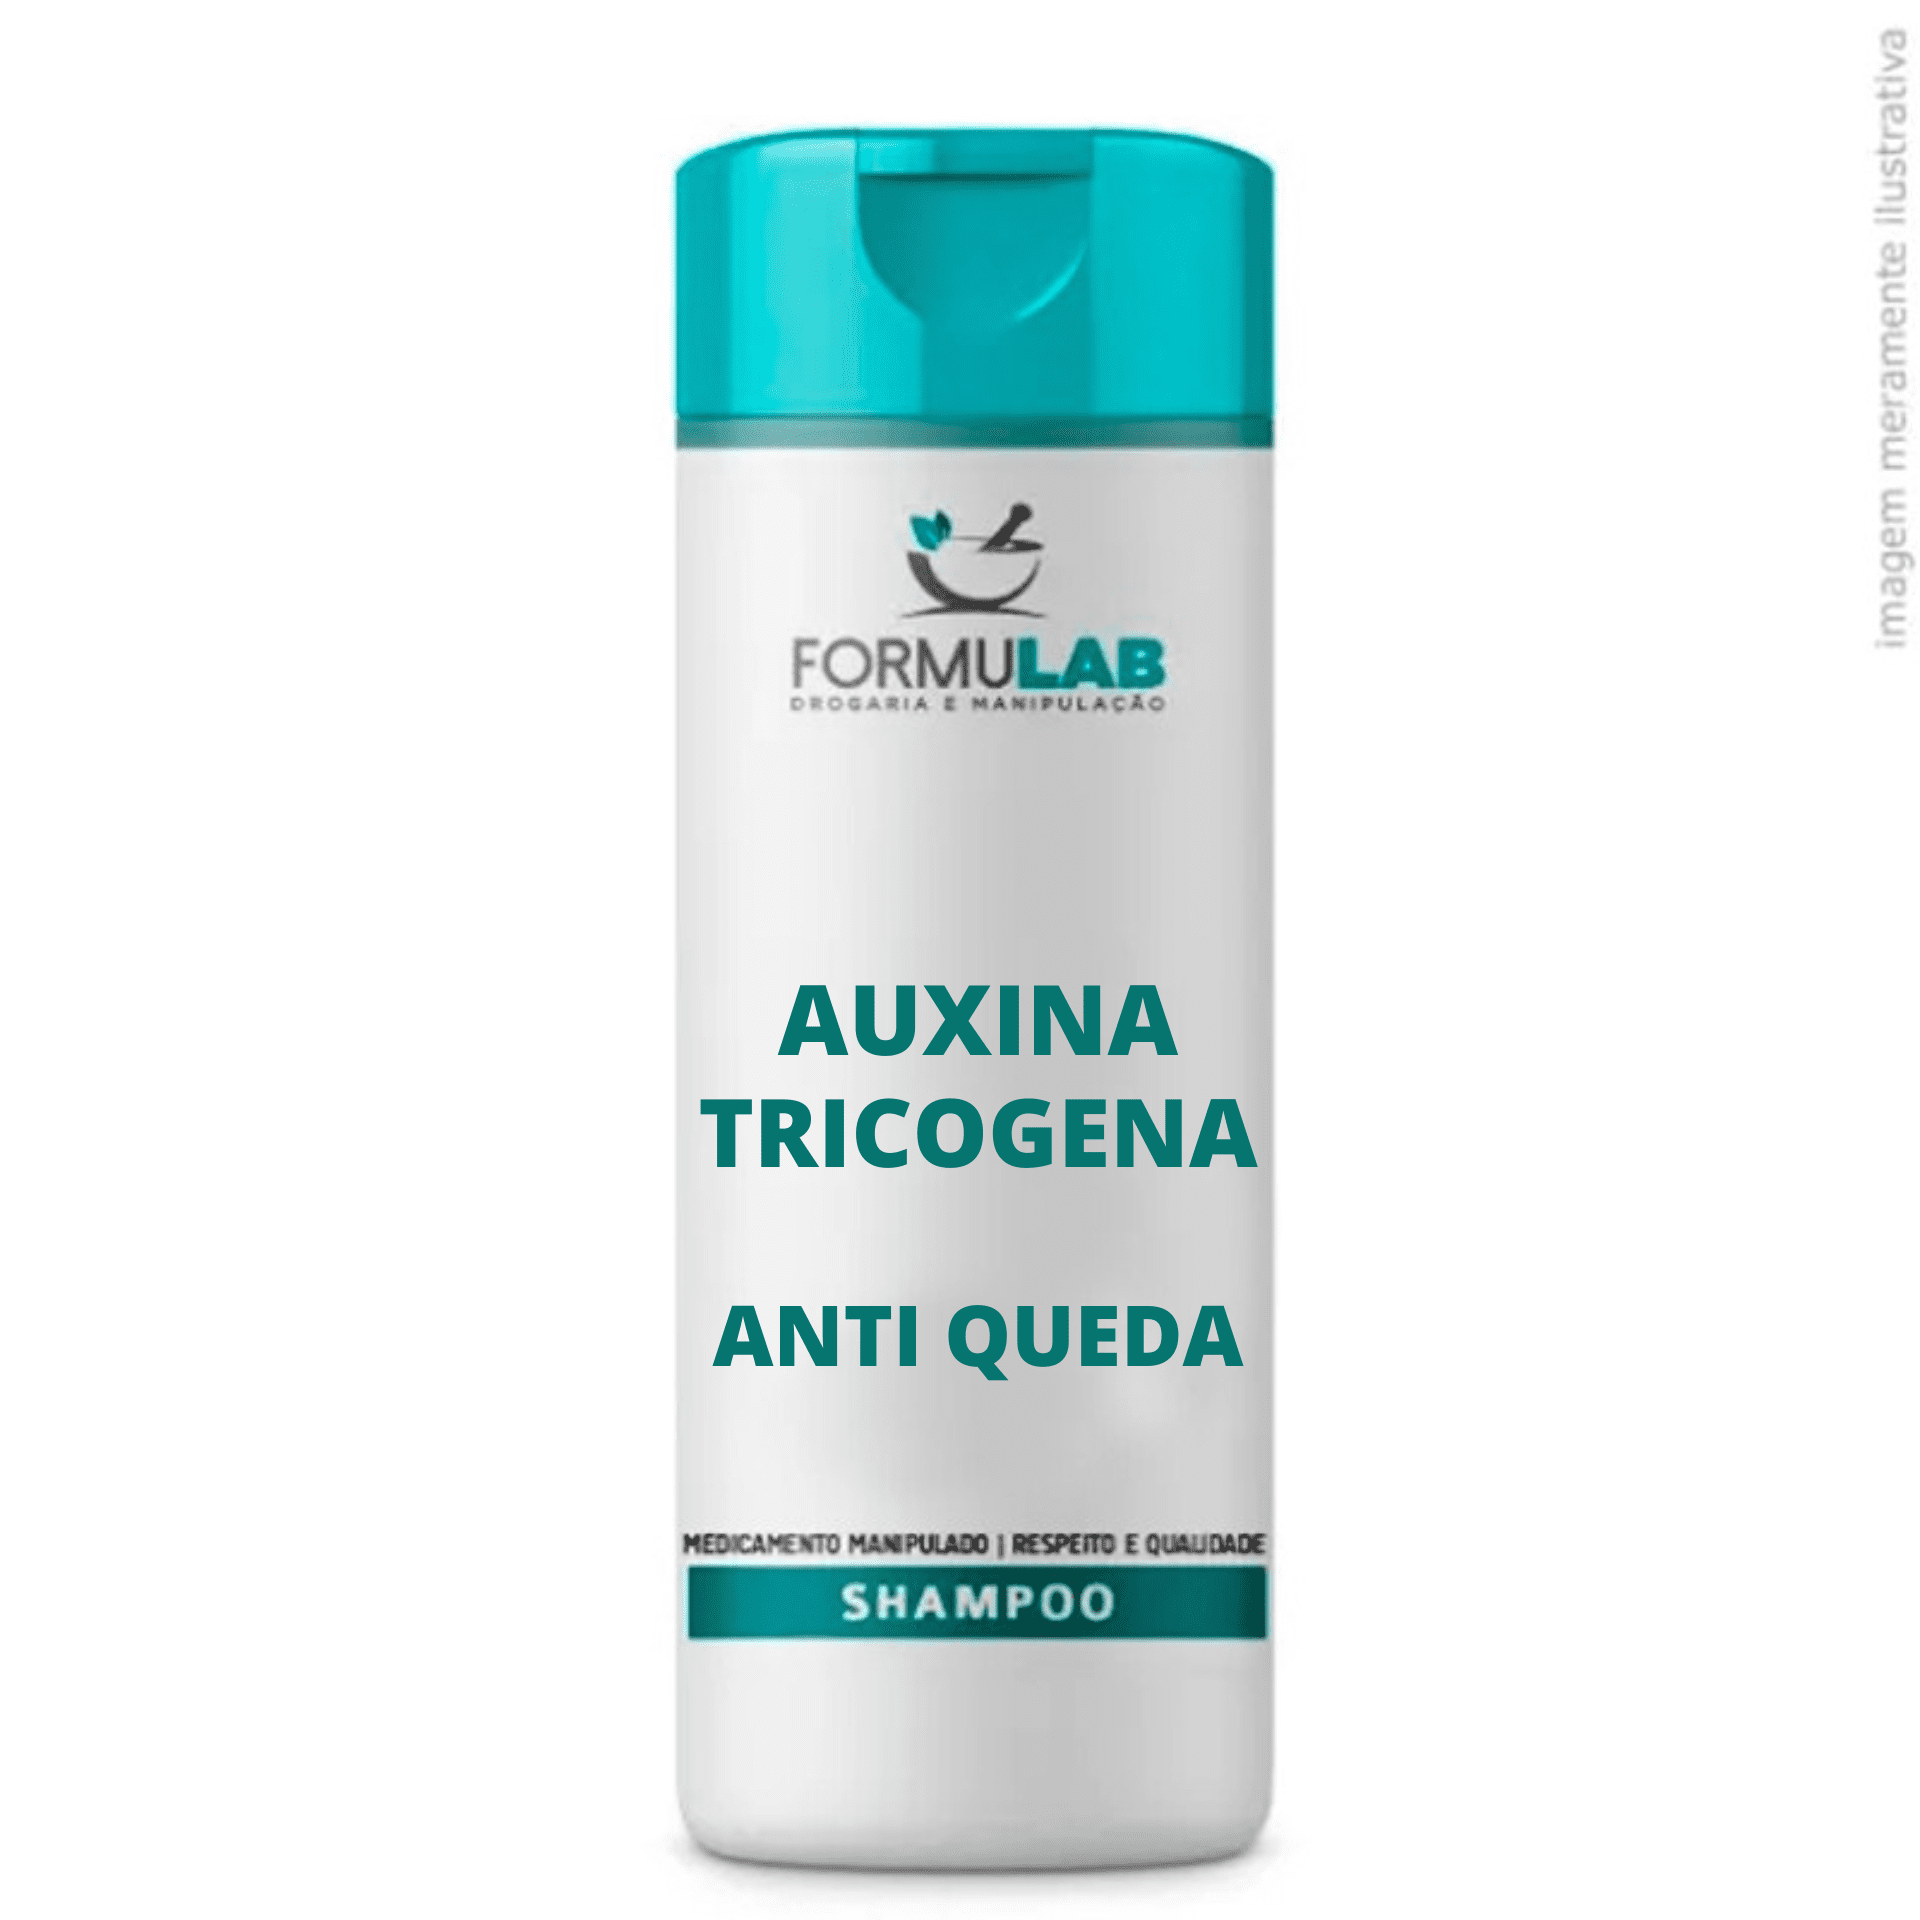 Auxina Tricogena 15% - Shampoo Anti queda 120ml